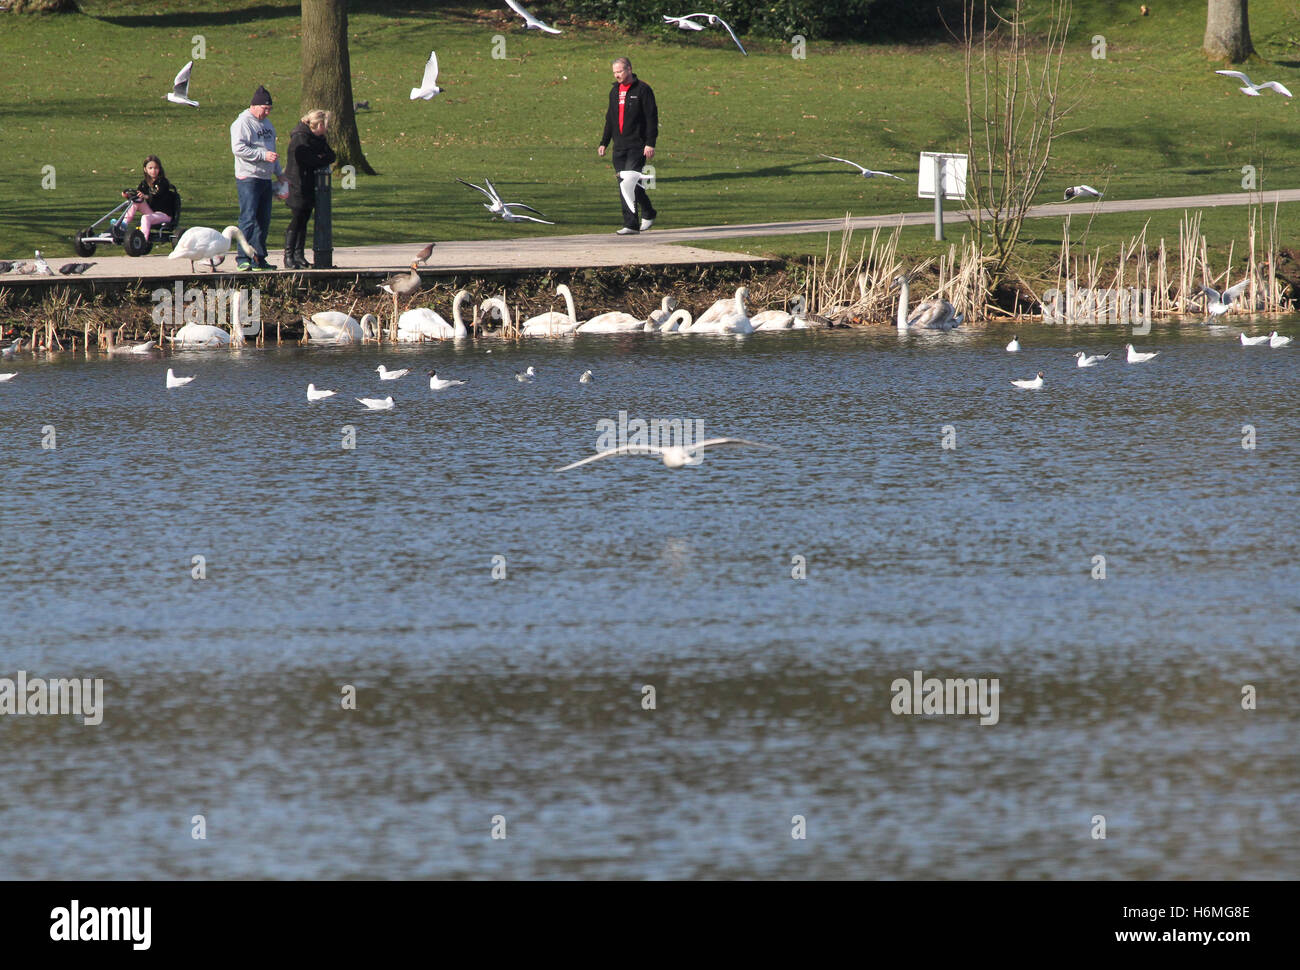 People feeding swans in Lurgan Park Lake, Lurgan, County Armagh, Northern Ireland. Stock Photo